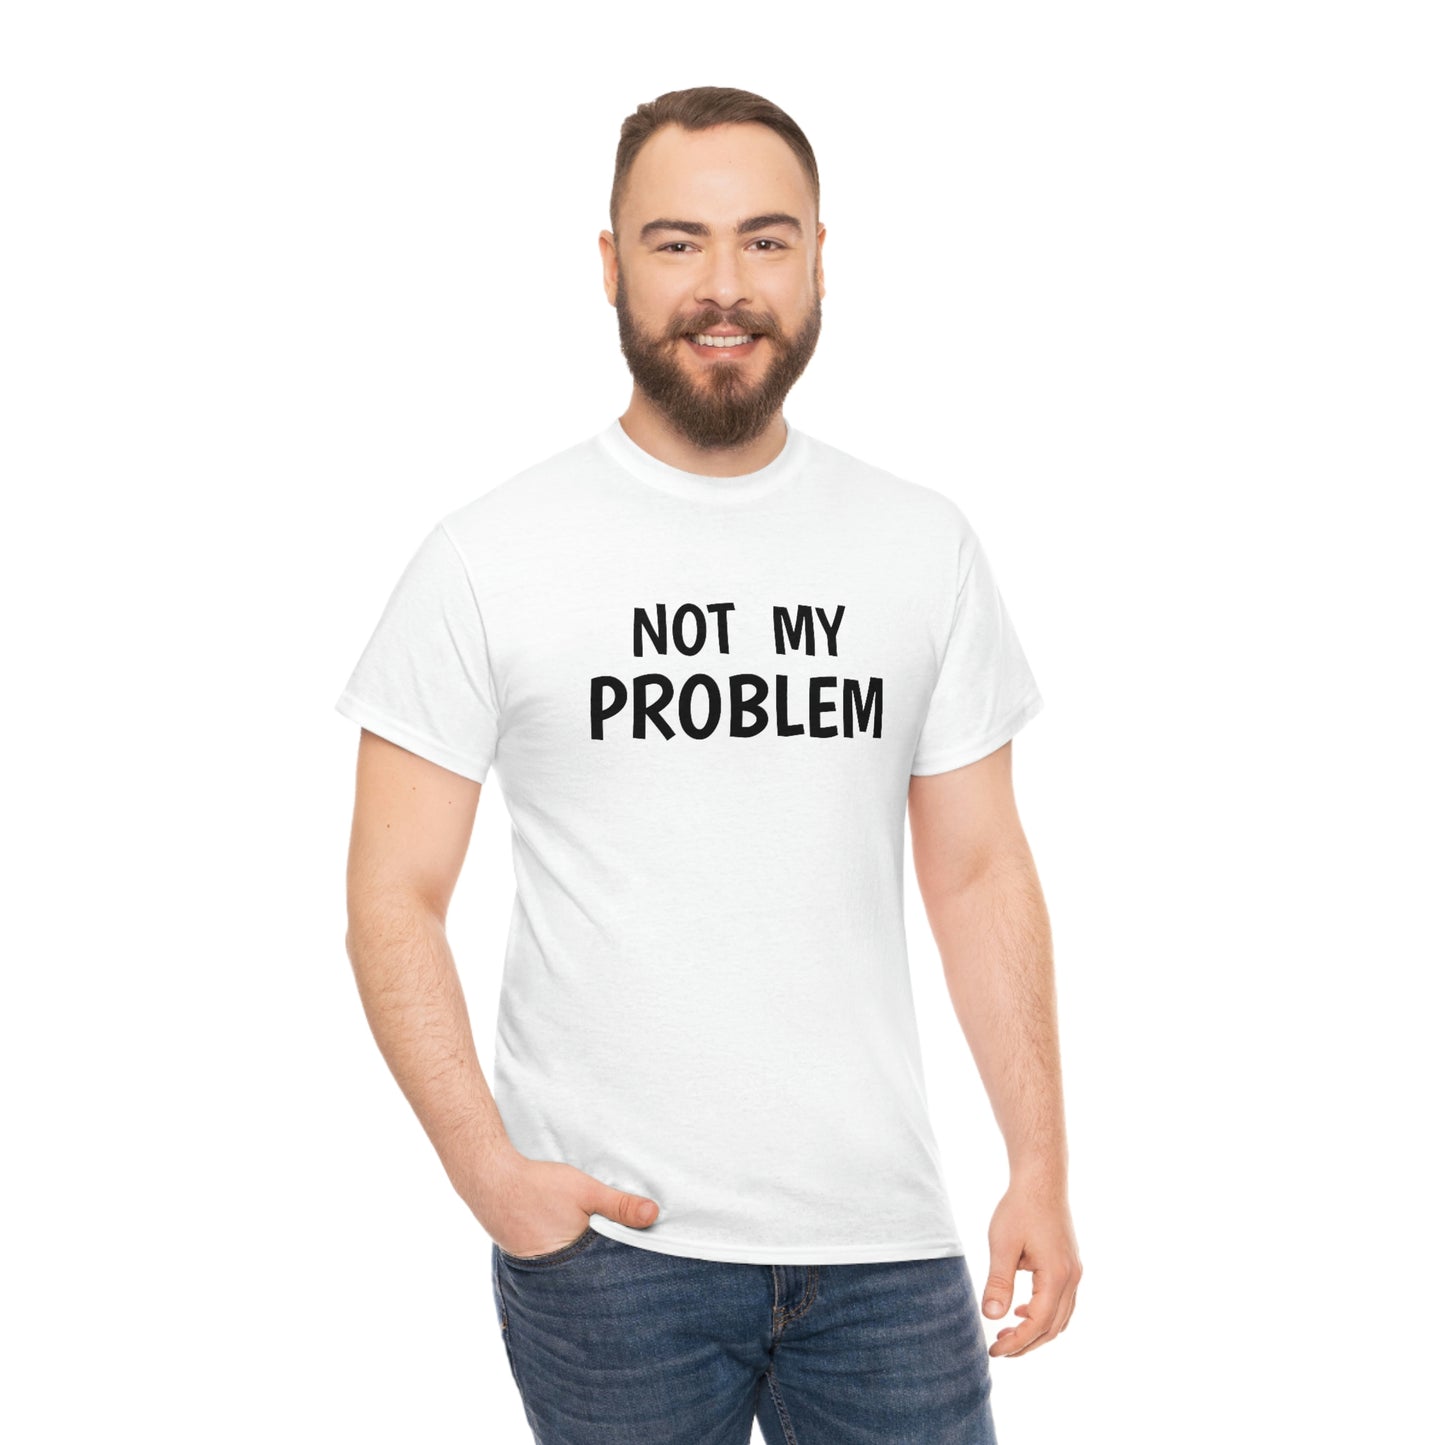 NOT MY PROBLEM T-SHIRT